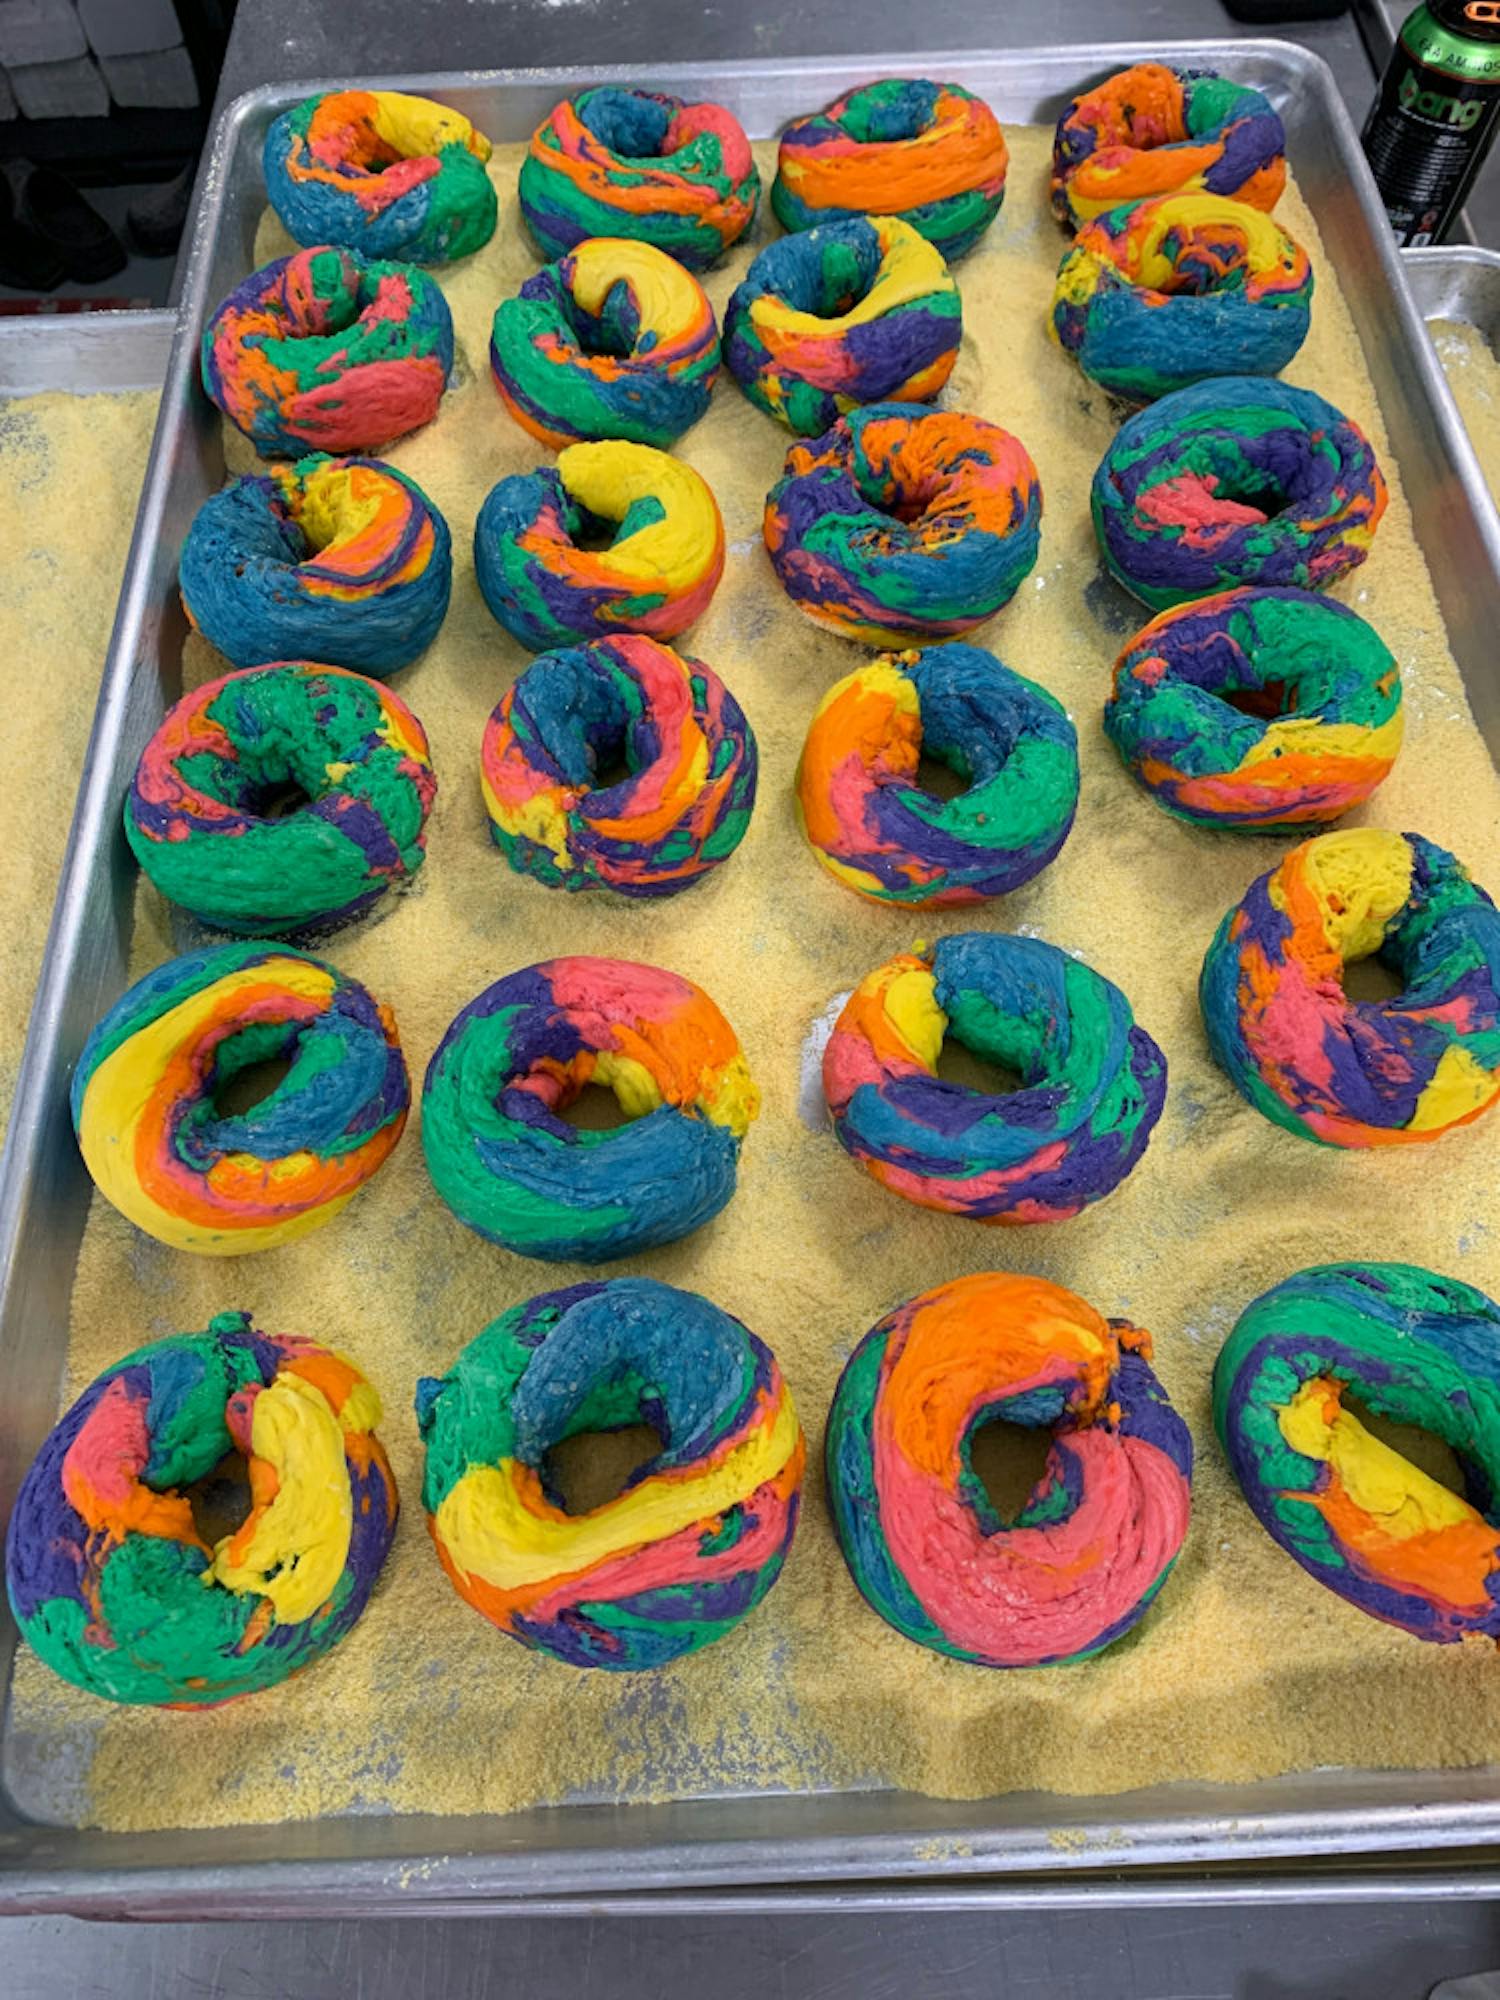 The last weekend of Pride Month Luke’s New York Bagel’s will sell rainbow doughnuts.